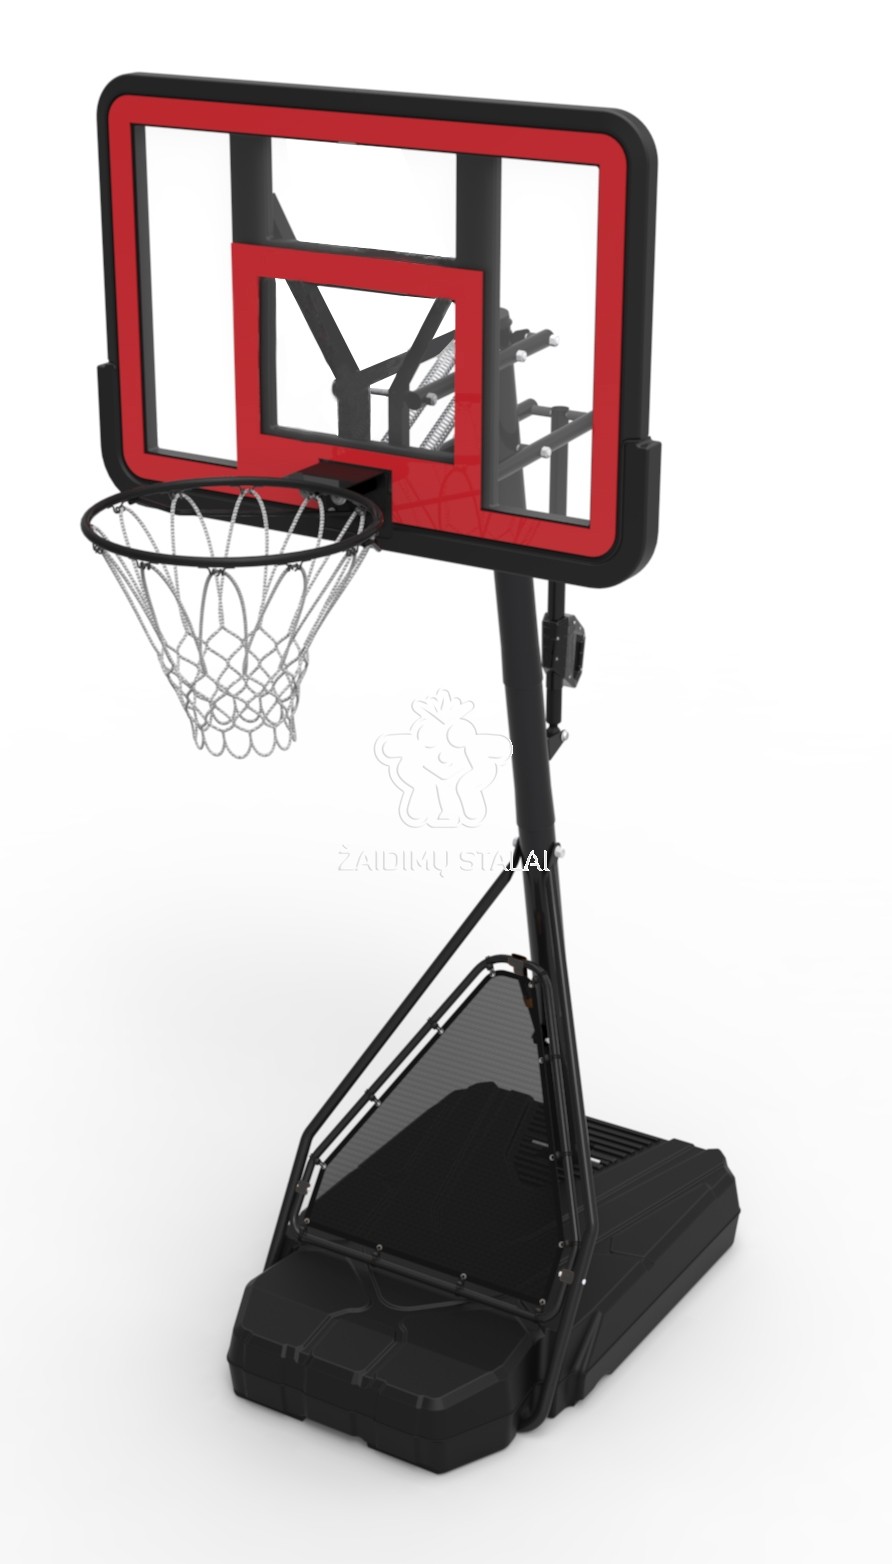 Mobilus krepšinio stovas Bilaro Denver 110x71cm